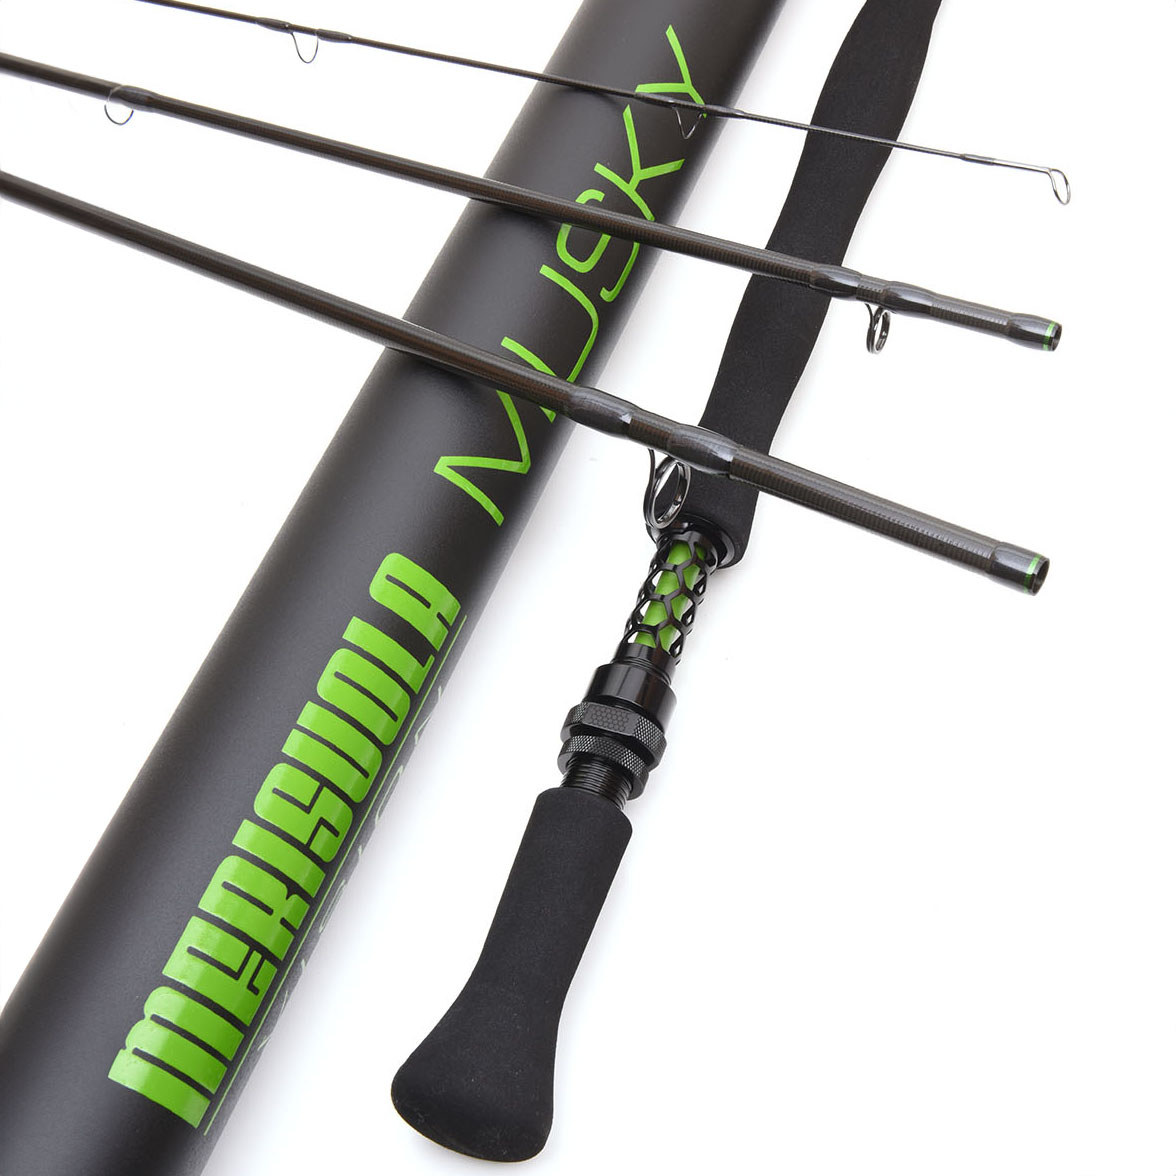 Vision Merisuola Musky Fly Rod – Guide Flyfishing, Fly Fishing Rods, Reels, Sage, Redington, RIO